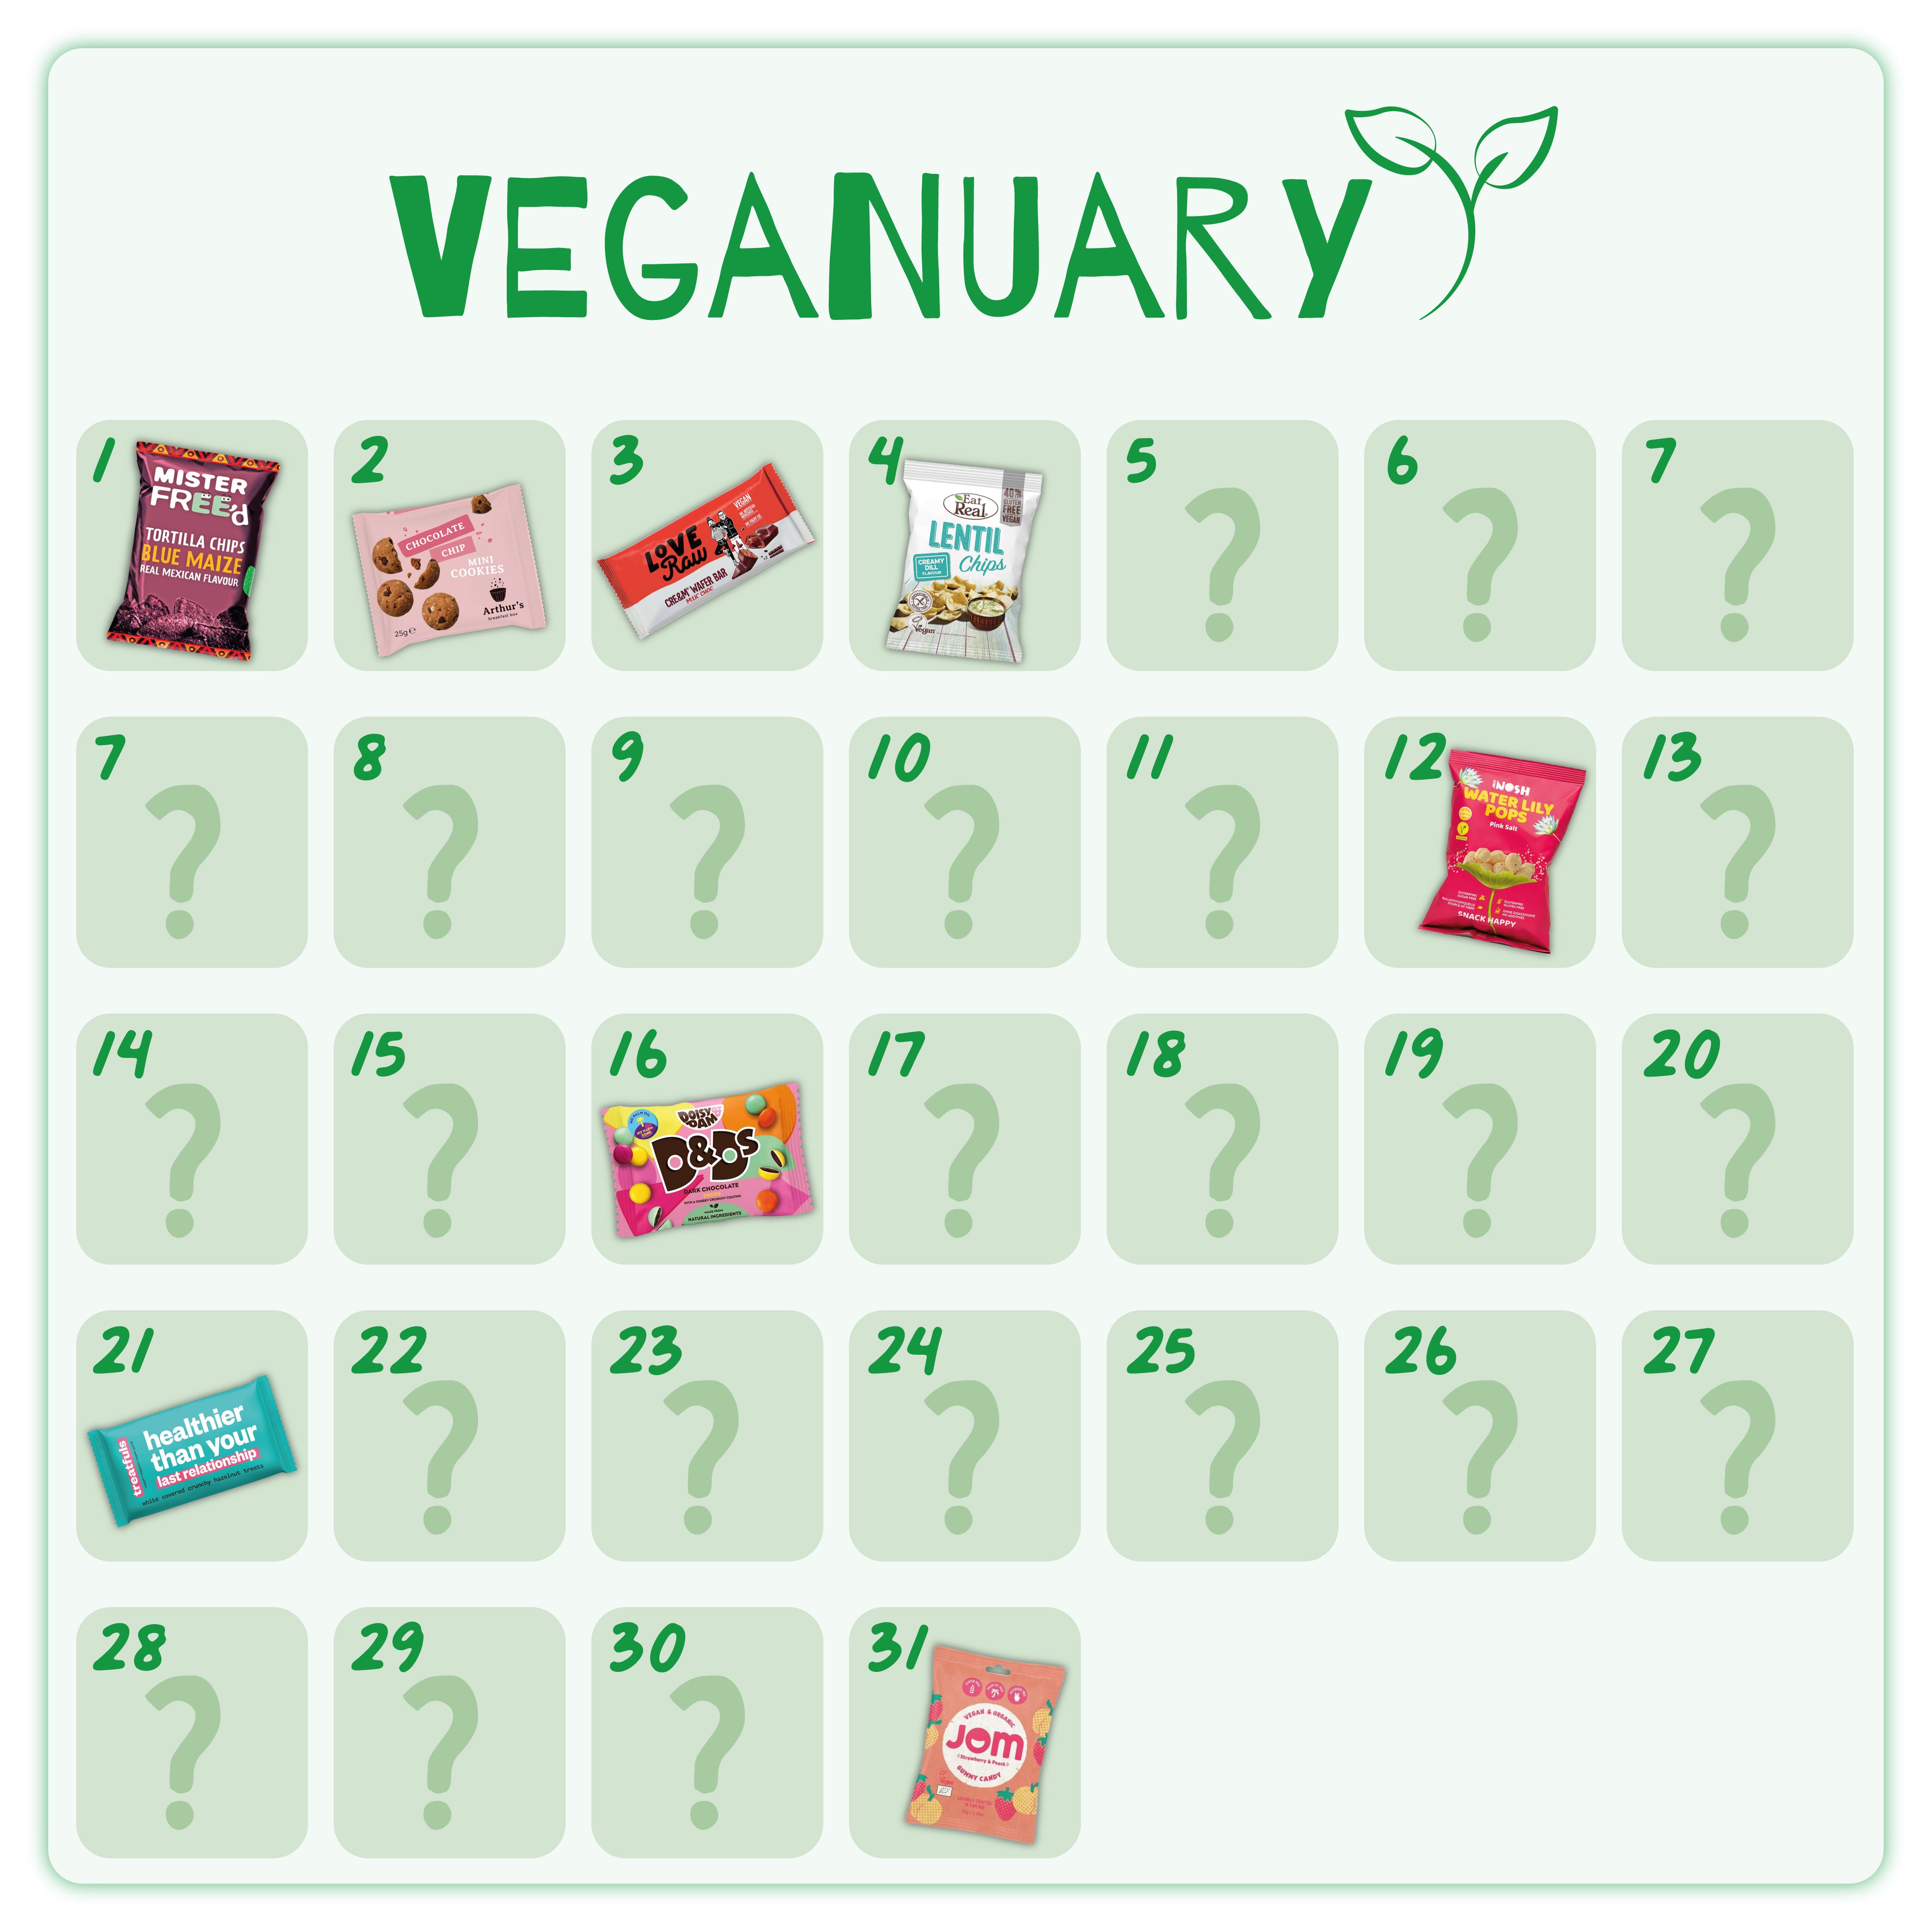 Veganuary Kalender || Lieferung ab dem 20.12.